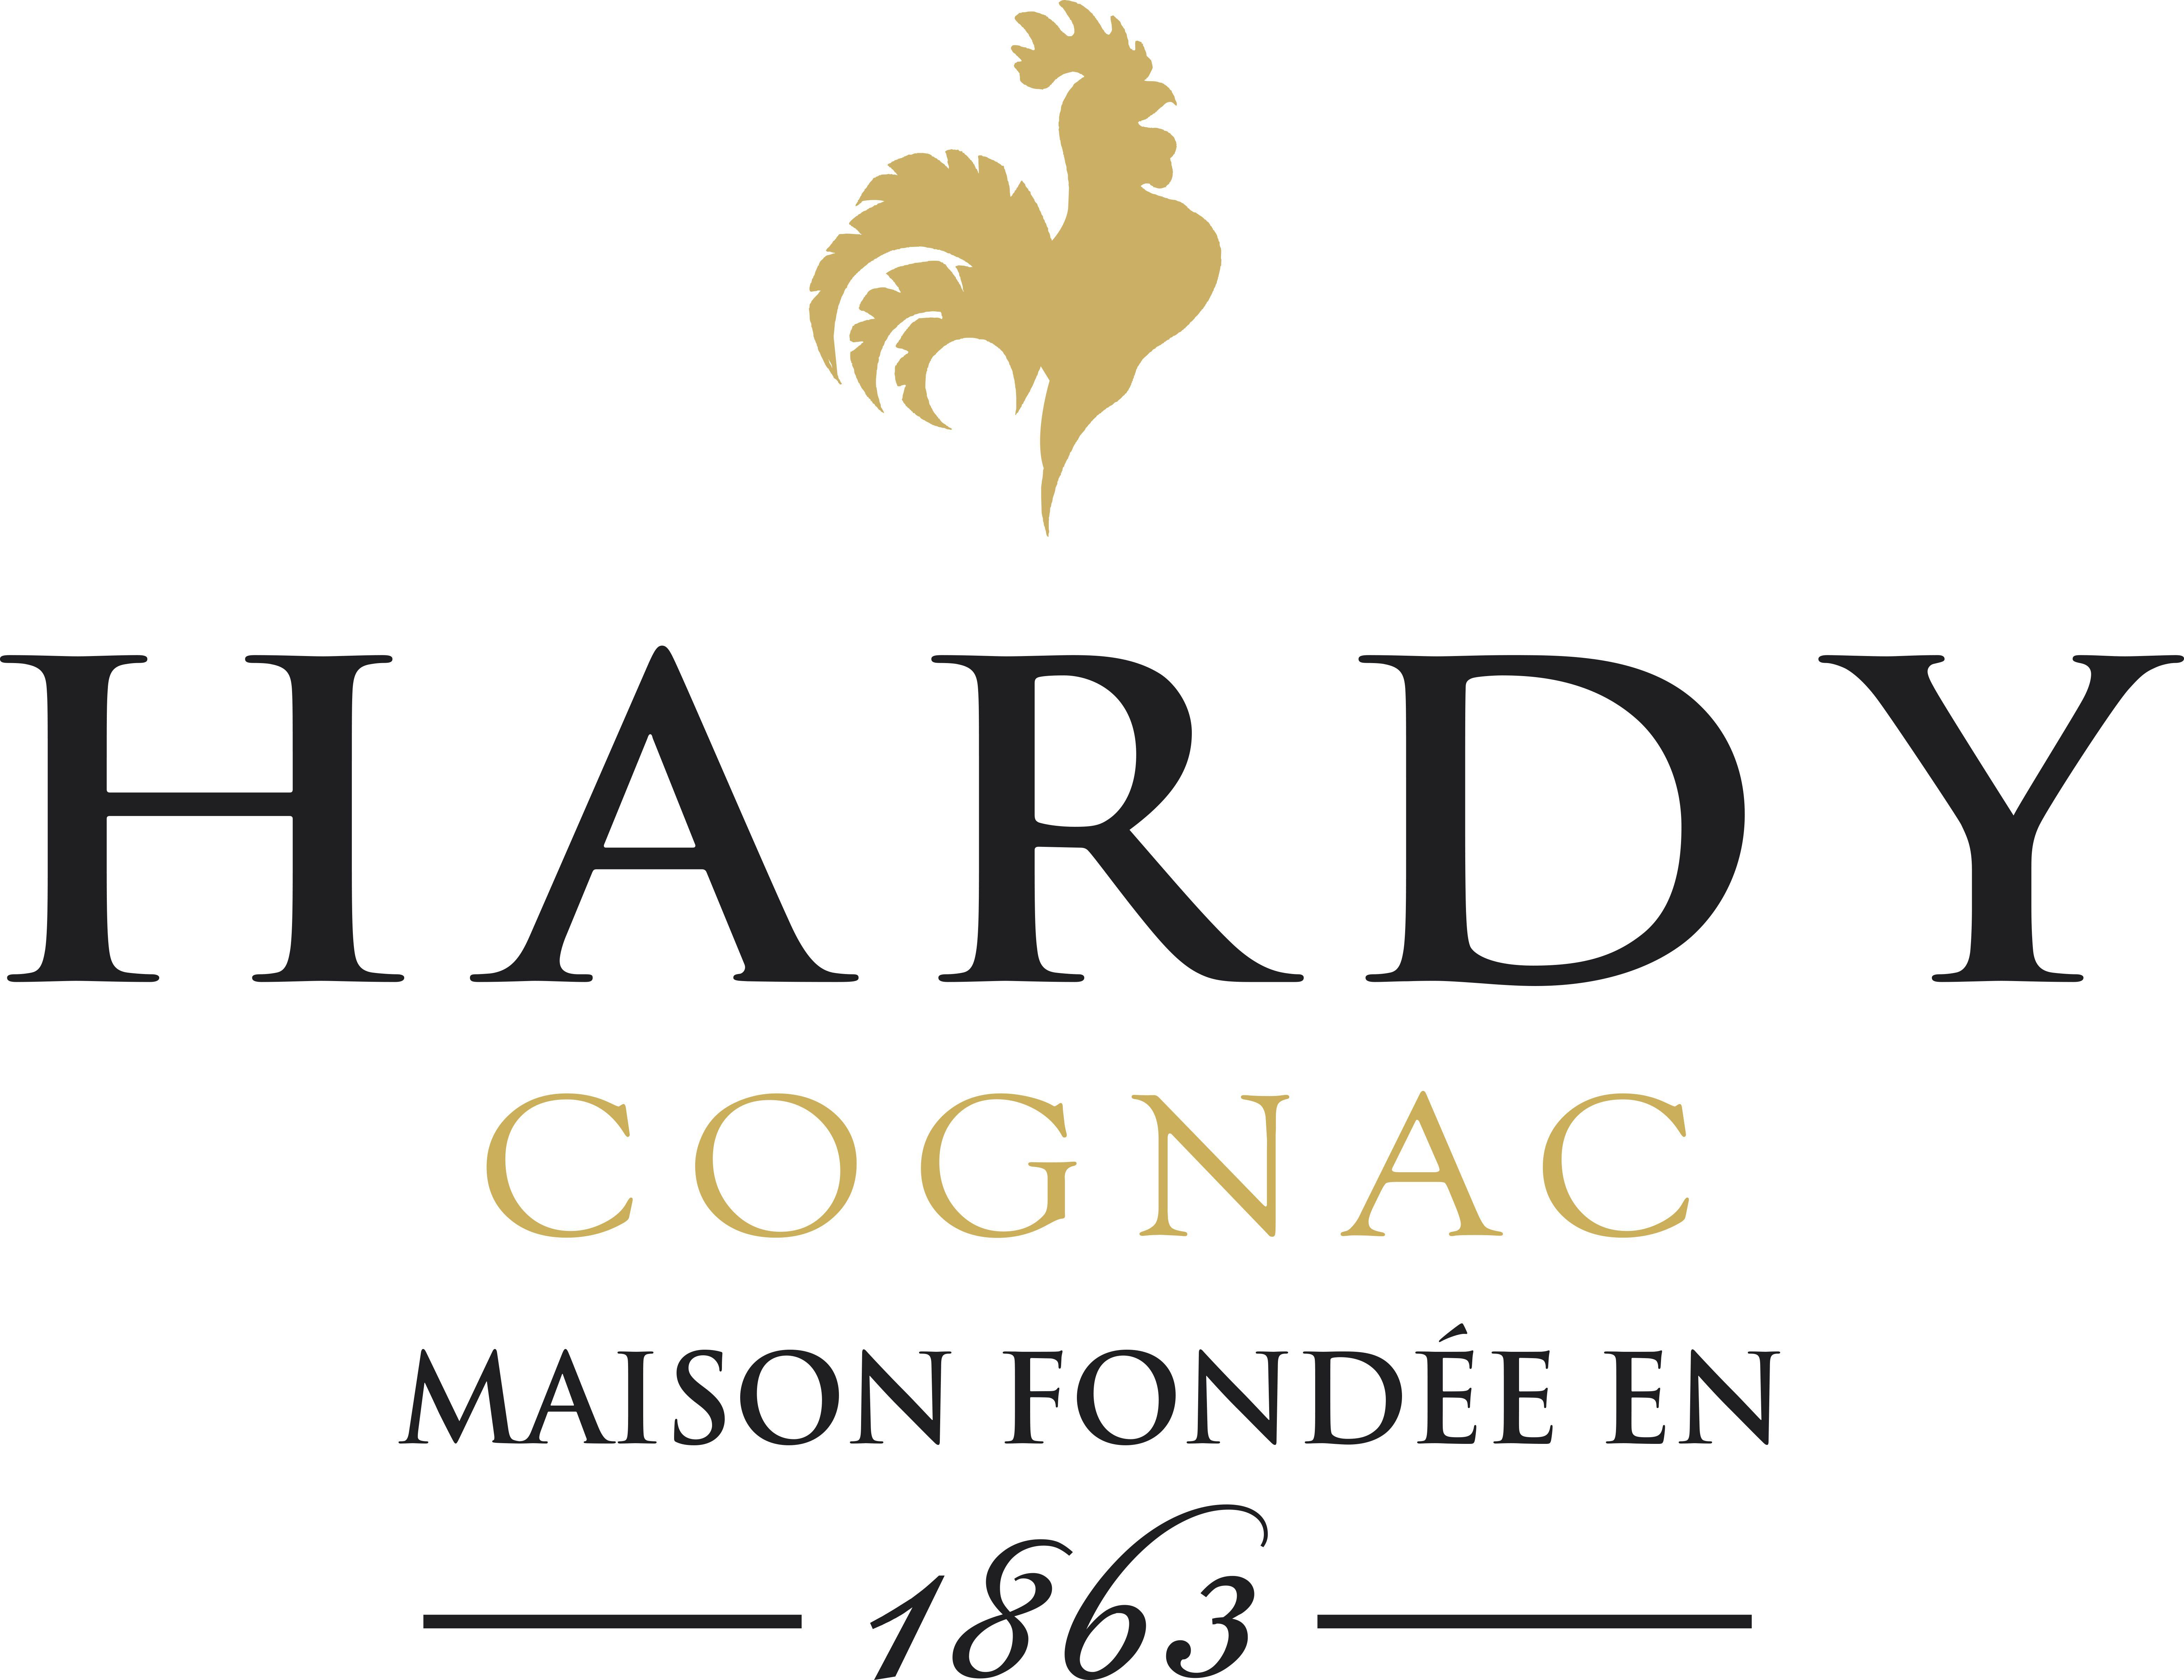 Hardy Logo - Logo Hardy + COGNAC - Alliance Française Mpls/St Paul